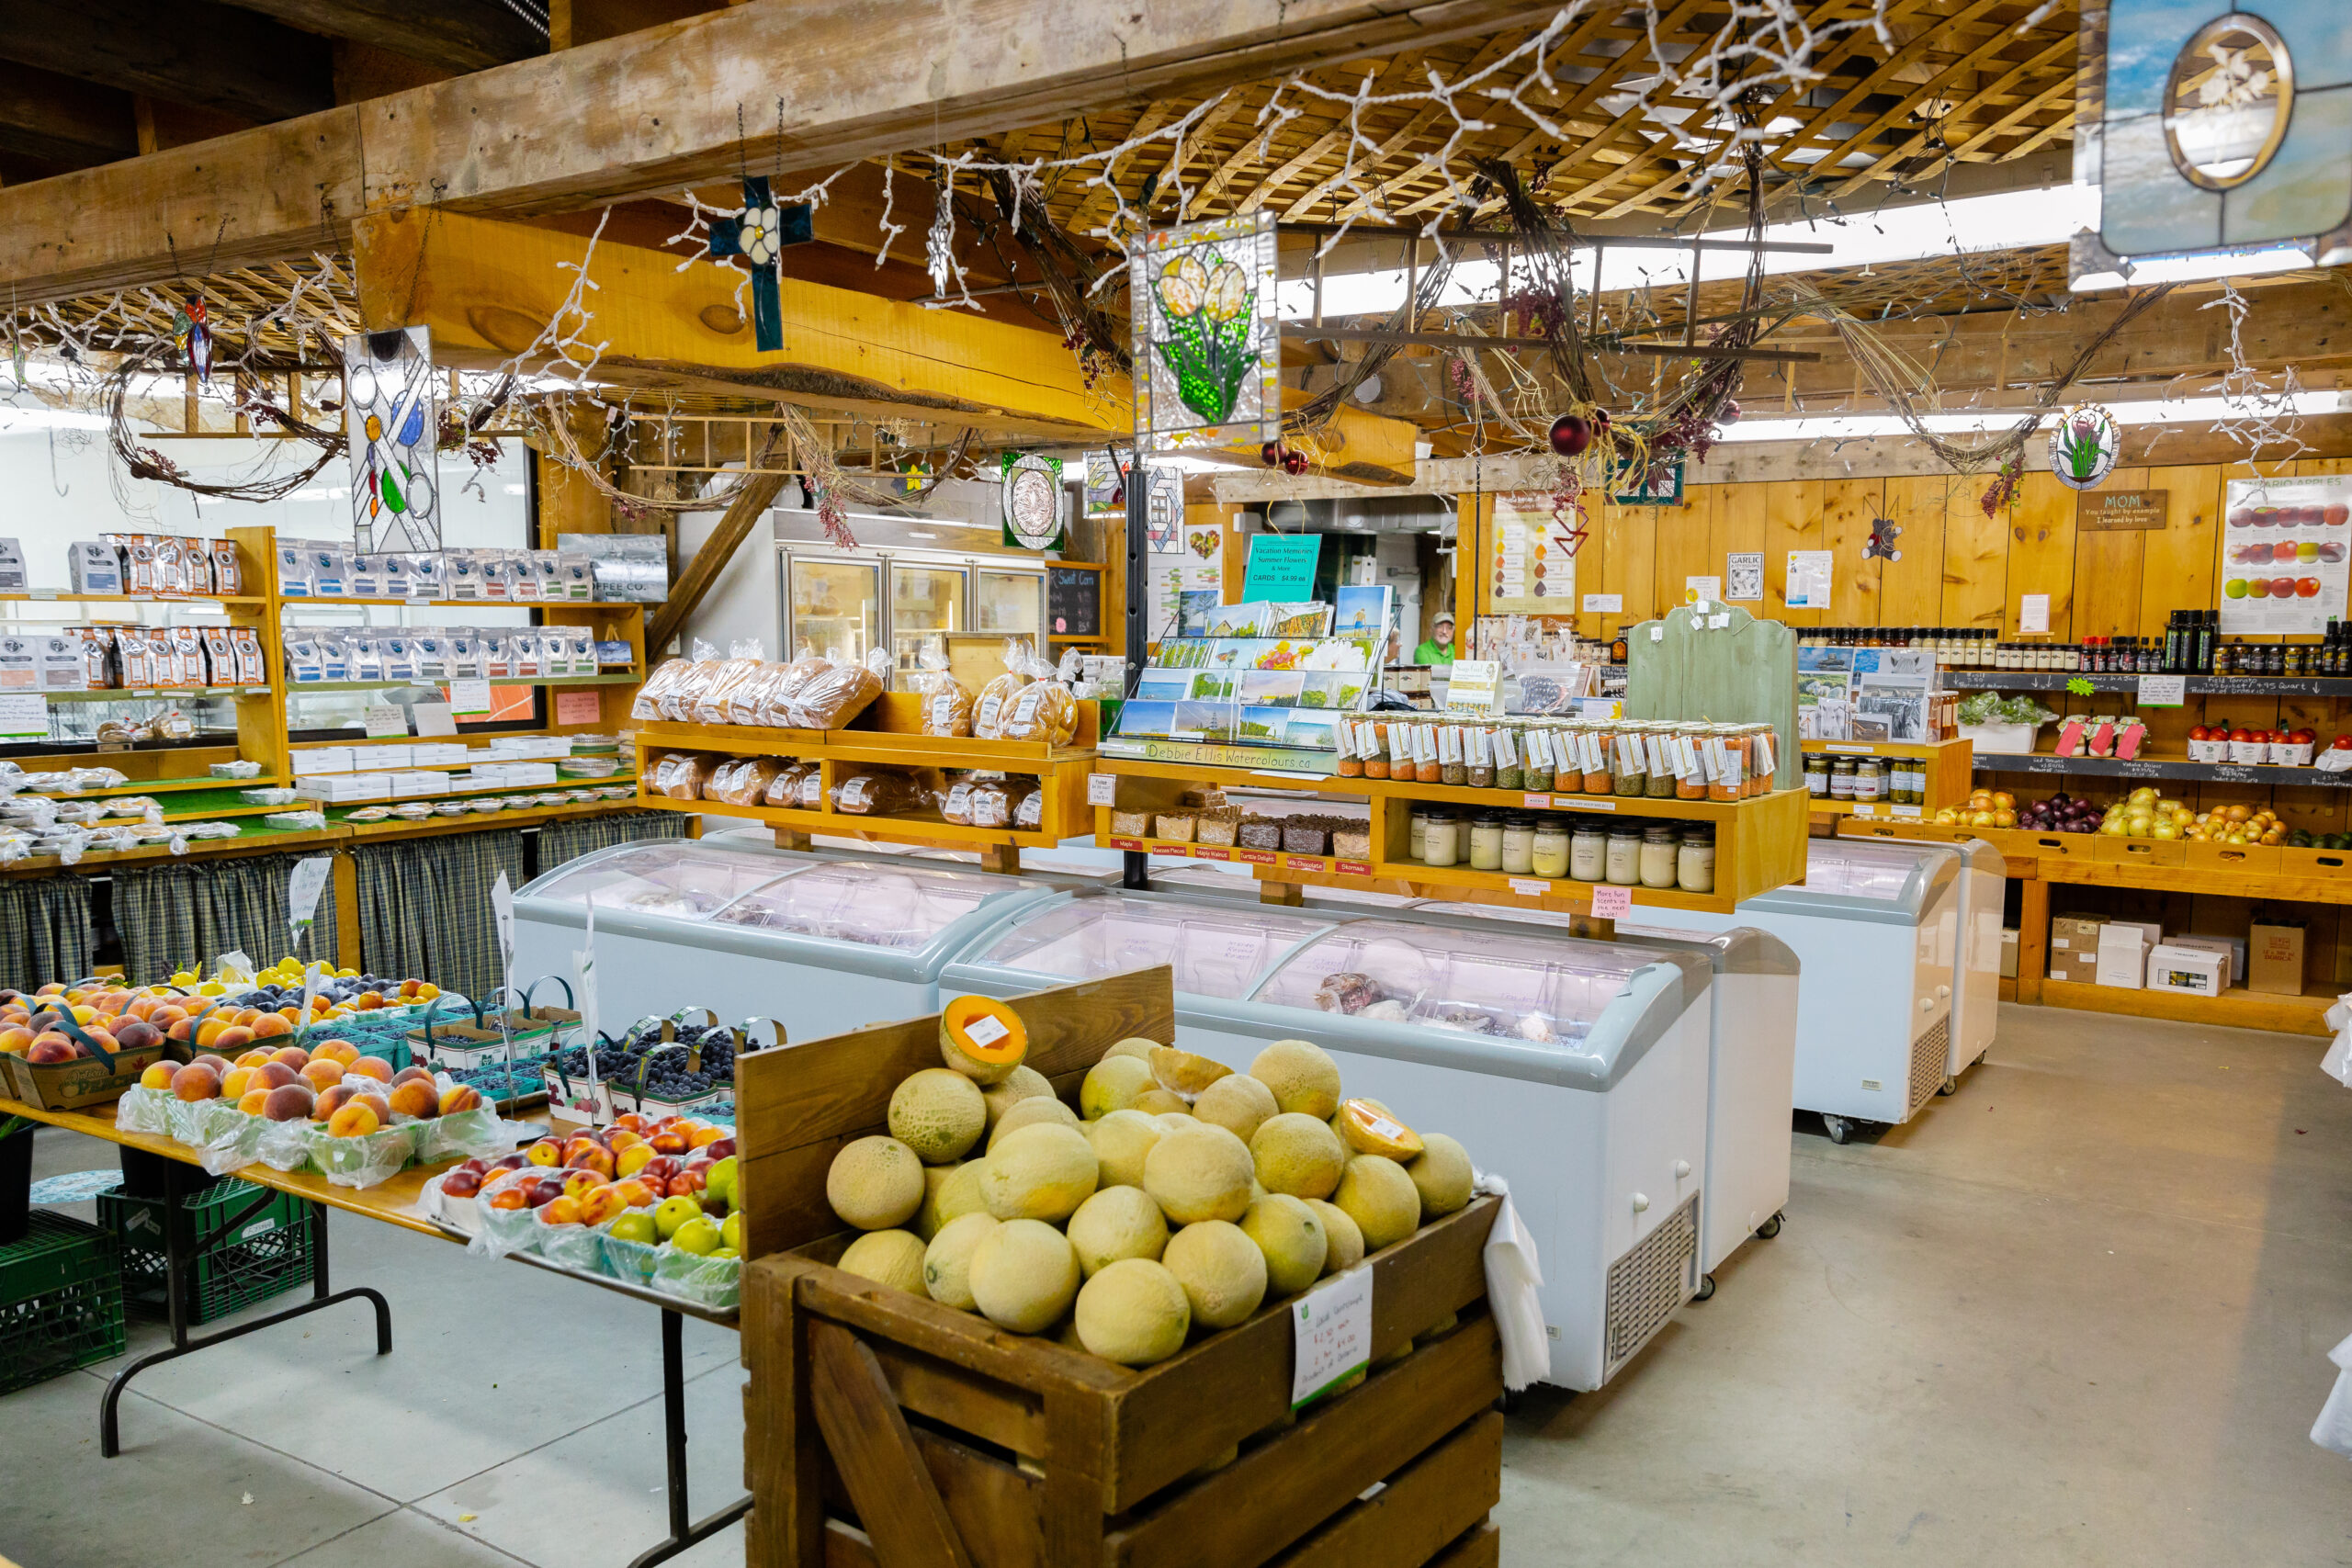 Mosborough Country market's interior